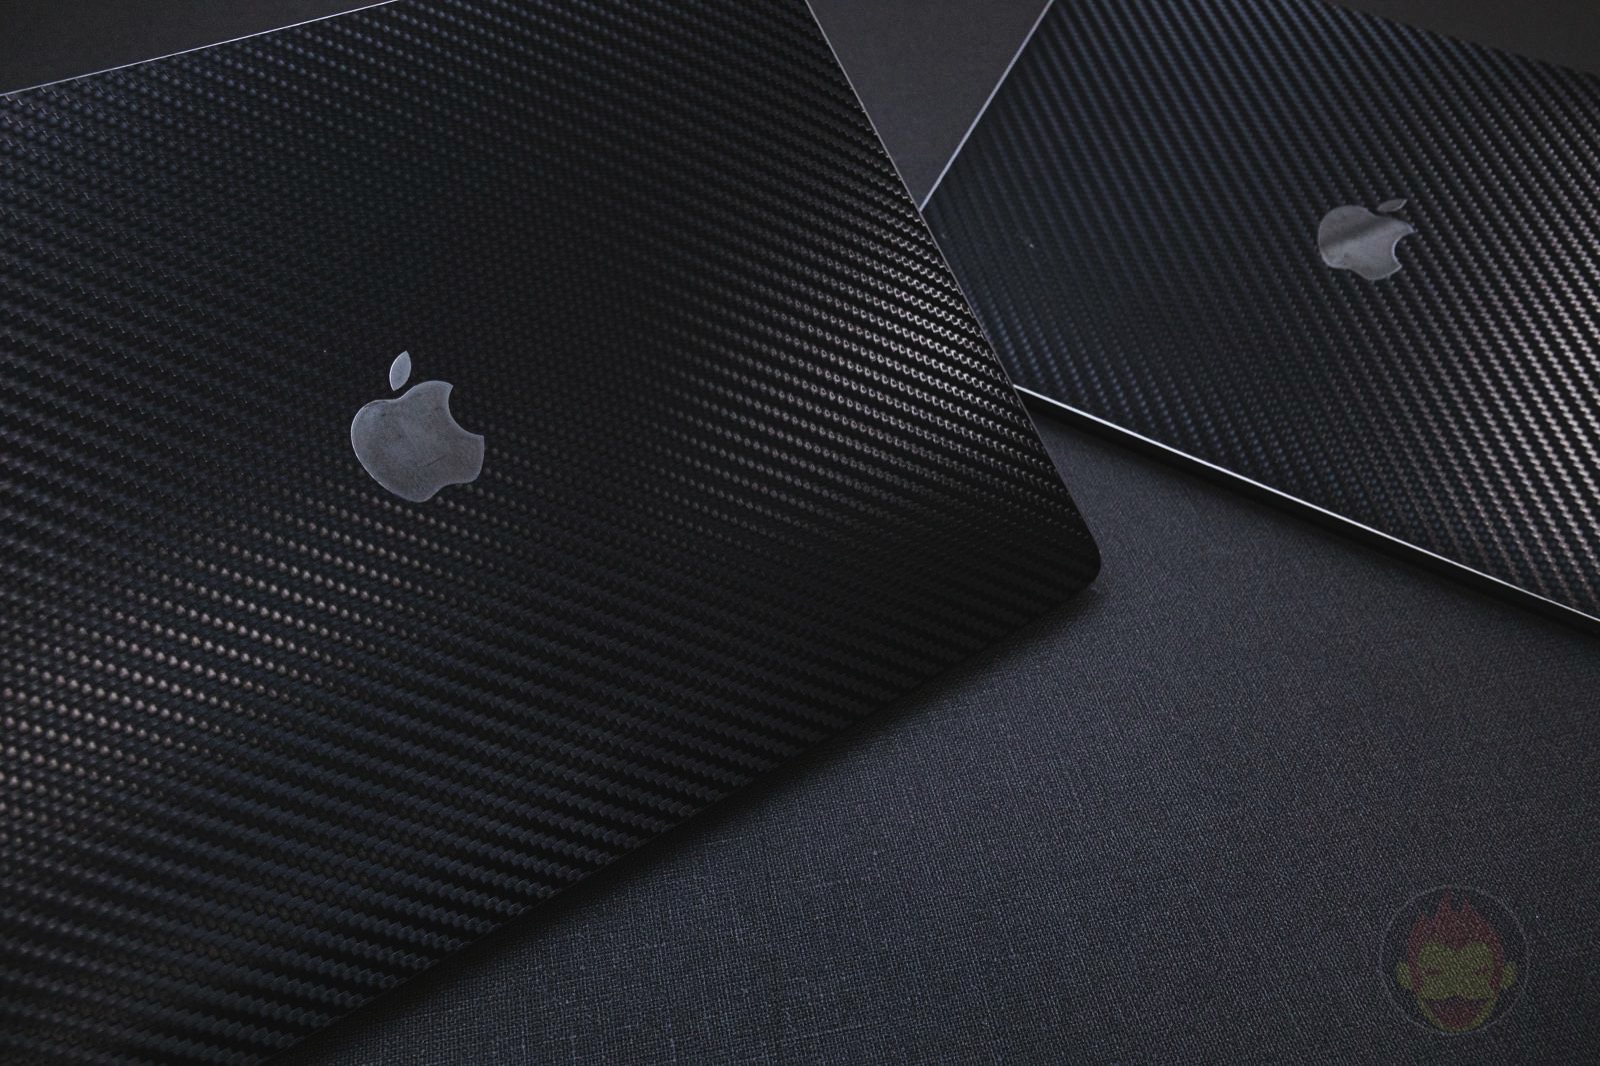 MacBook-Pro-13inch-or-15inch-2019-comparison-06.jpg